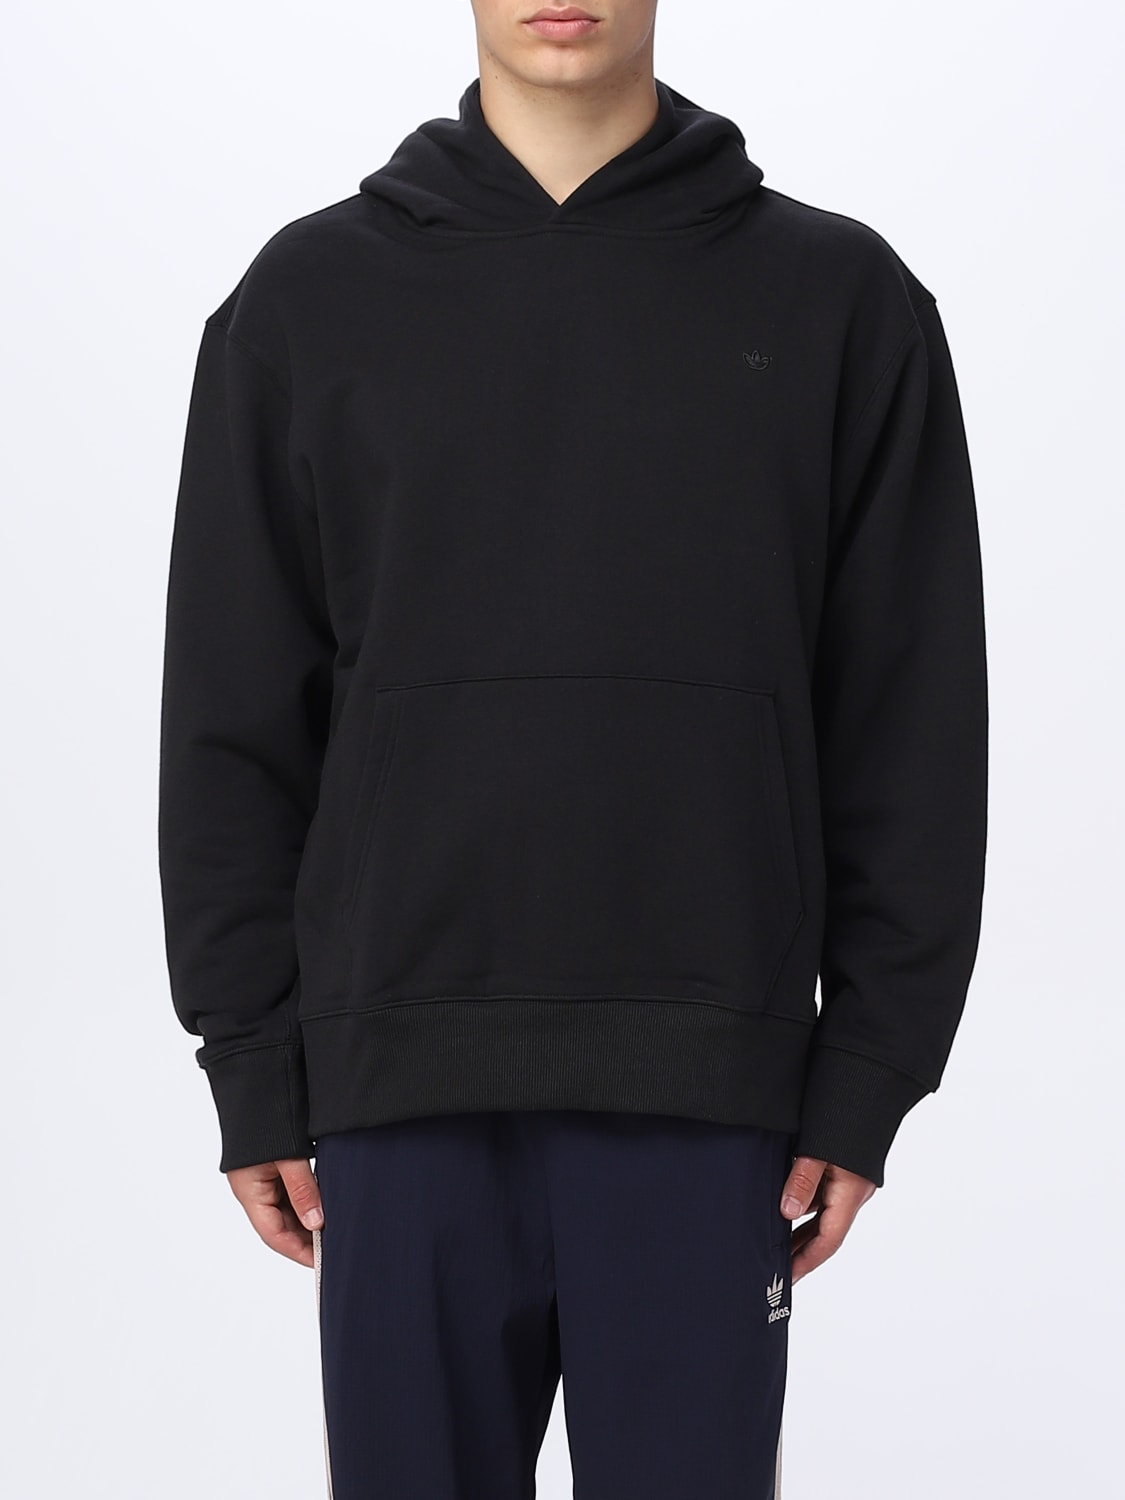 ADIDAS ORIGINALS: sweatshirt in cotton - Black | Adidas Originals sweatshirt  HK2937 online at | Sweatshirts